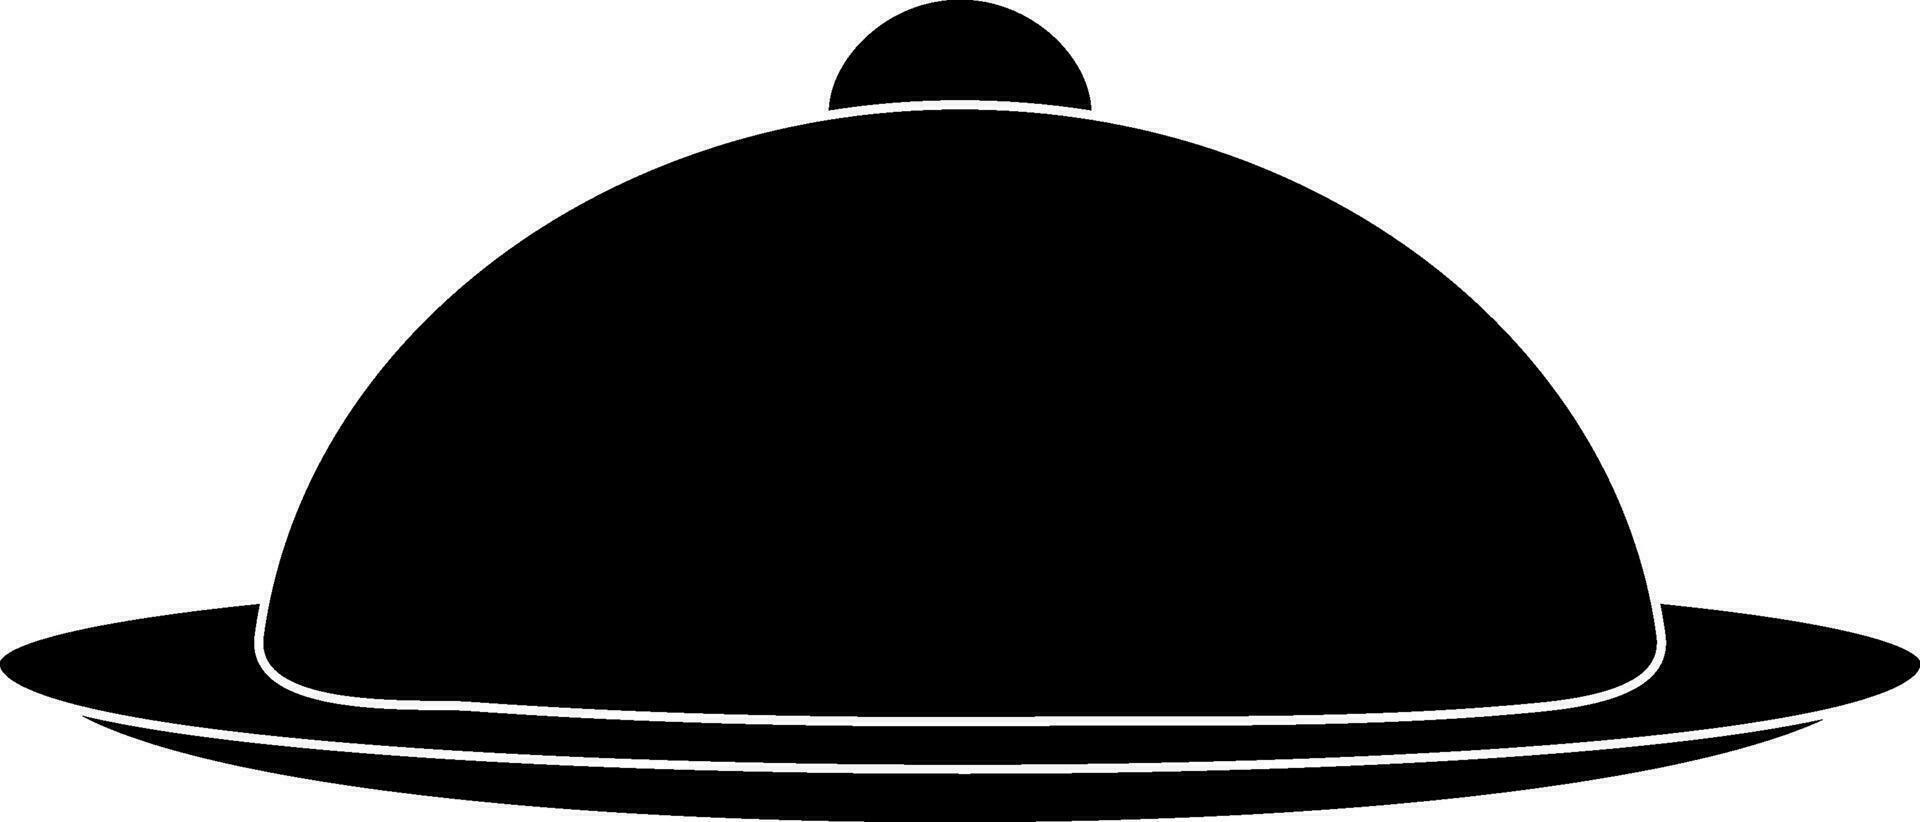 Restaurant cloche in Black and white color. Glyph icon or symbol. vector